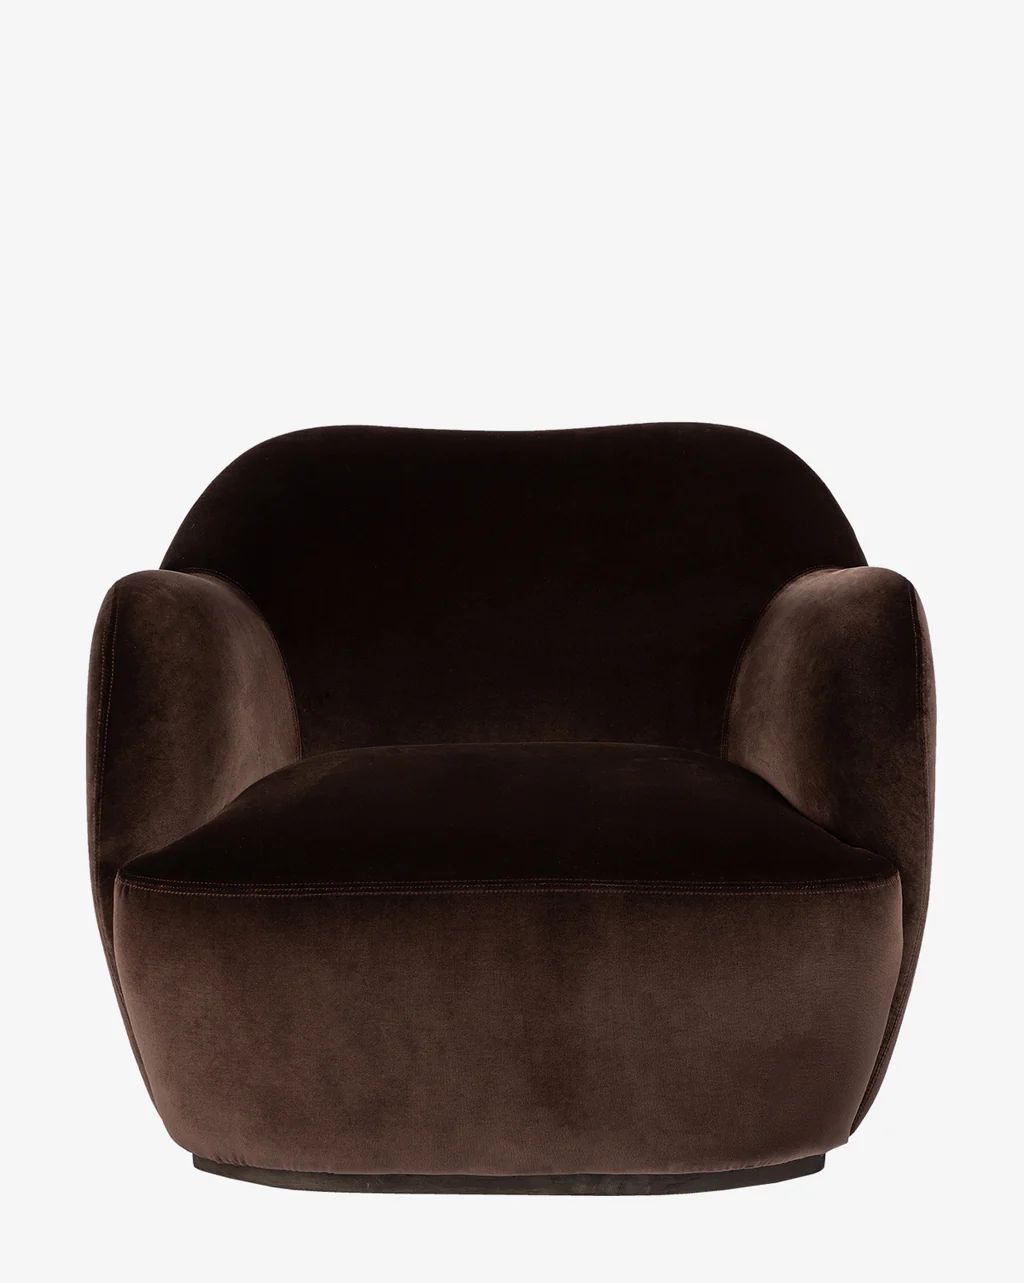 Moira Swivel Chair | McGee & Co.